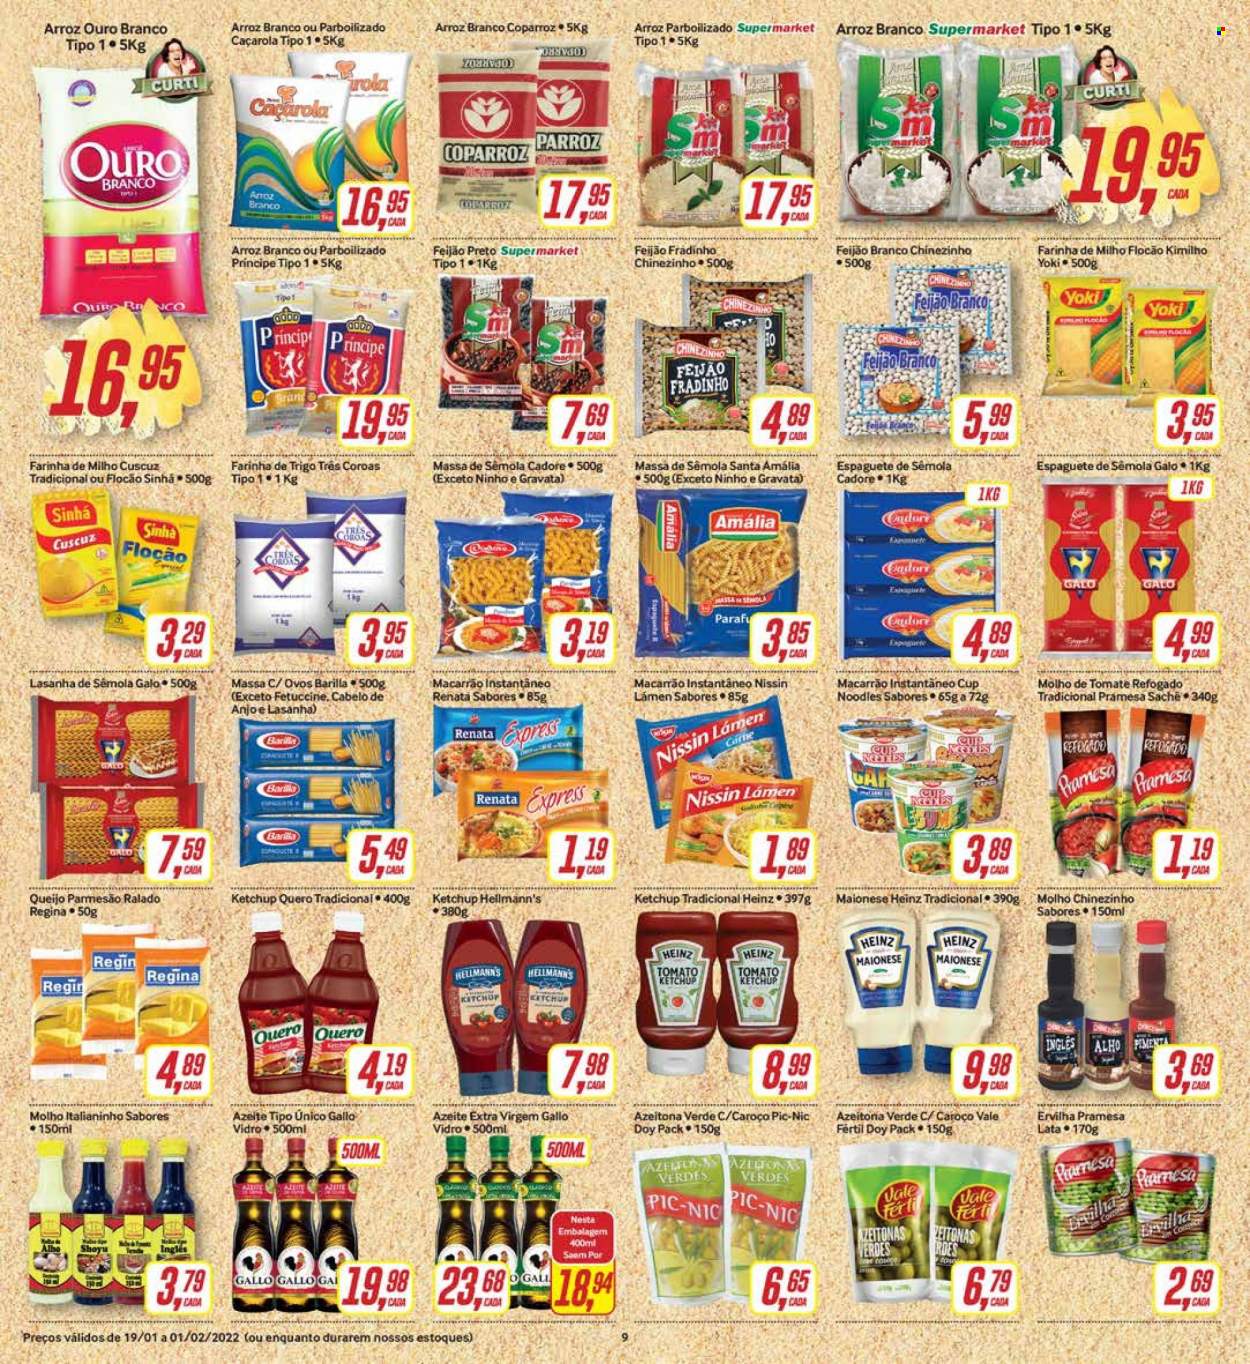 Encarte Rede Supermarket  - 19.01.2022 - 01.02.2022.